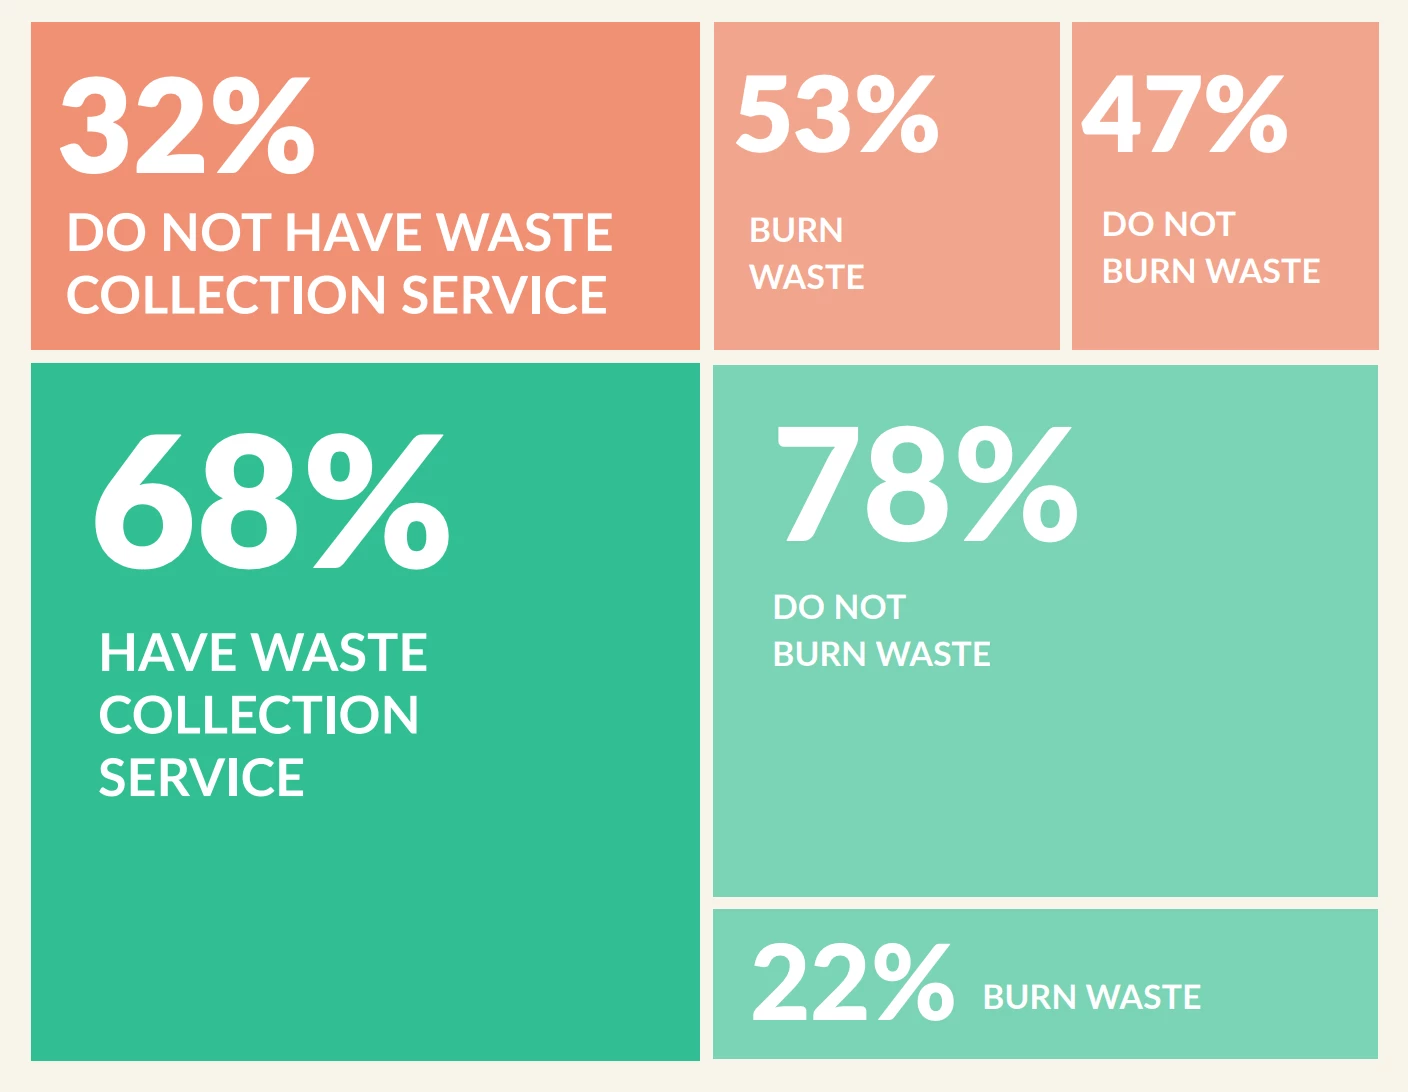 Figure 1. Waste management behavior in Laos